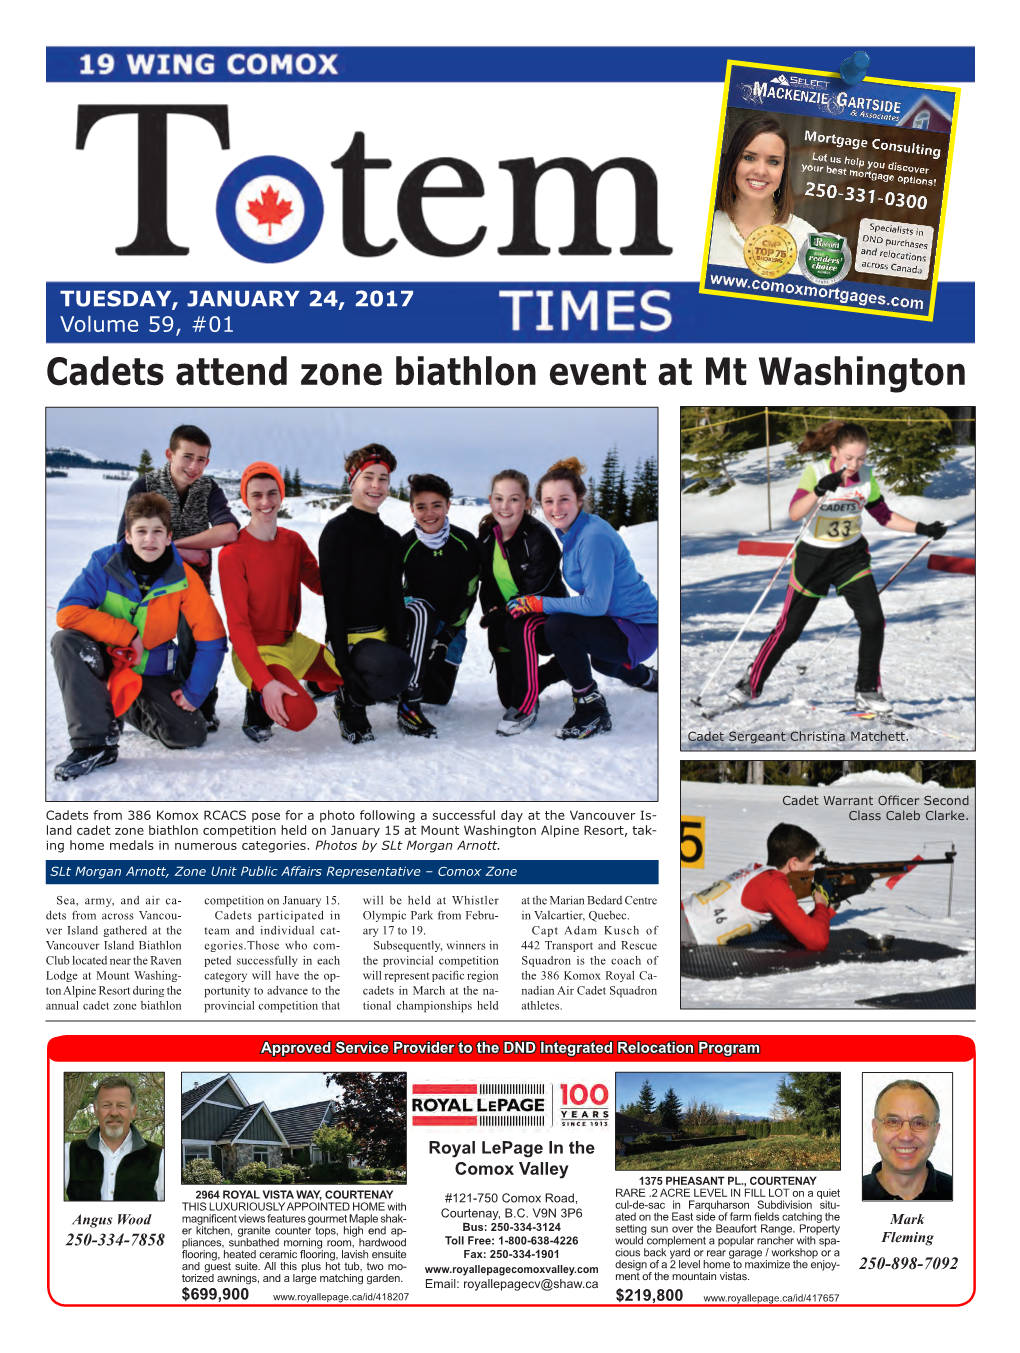 Cadets Attend Zone Biathlon Event at Mt Washington